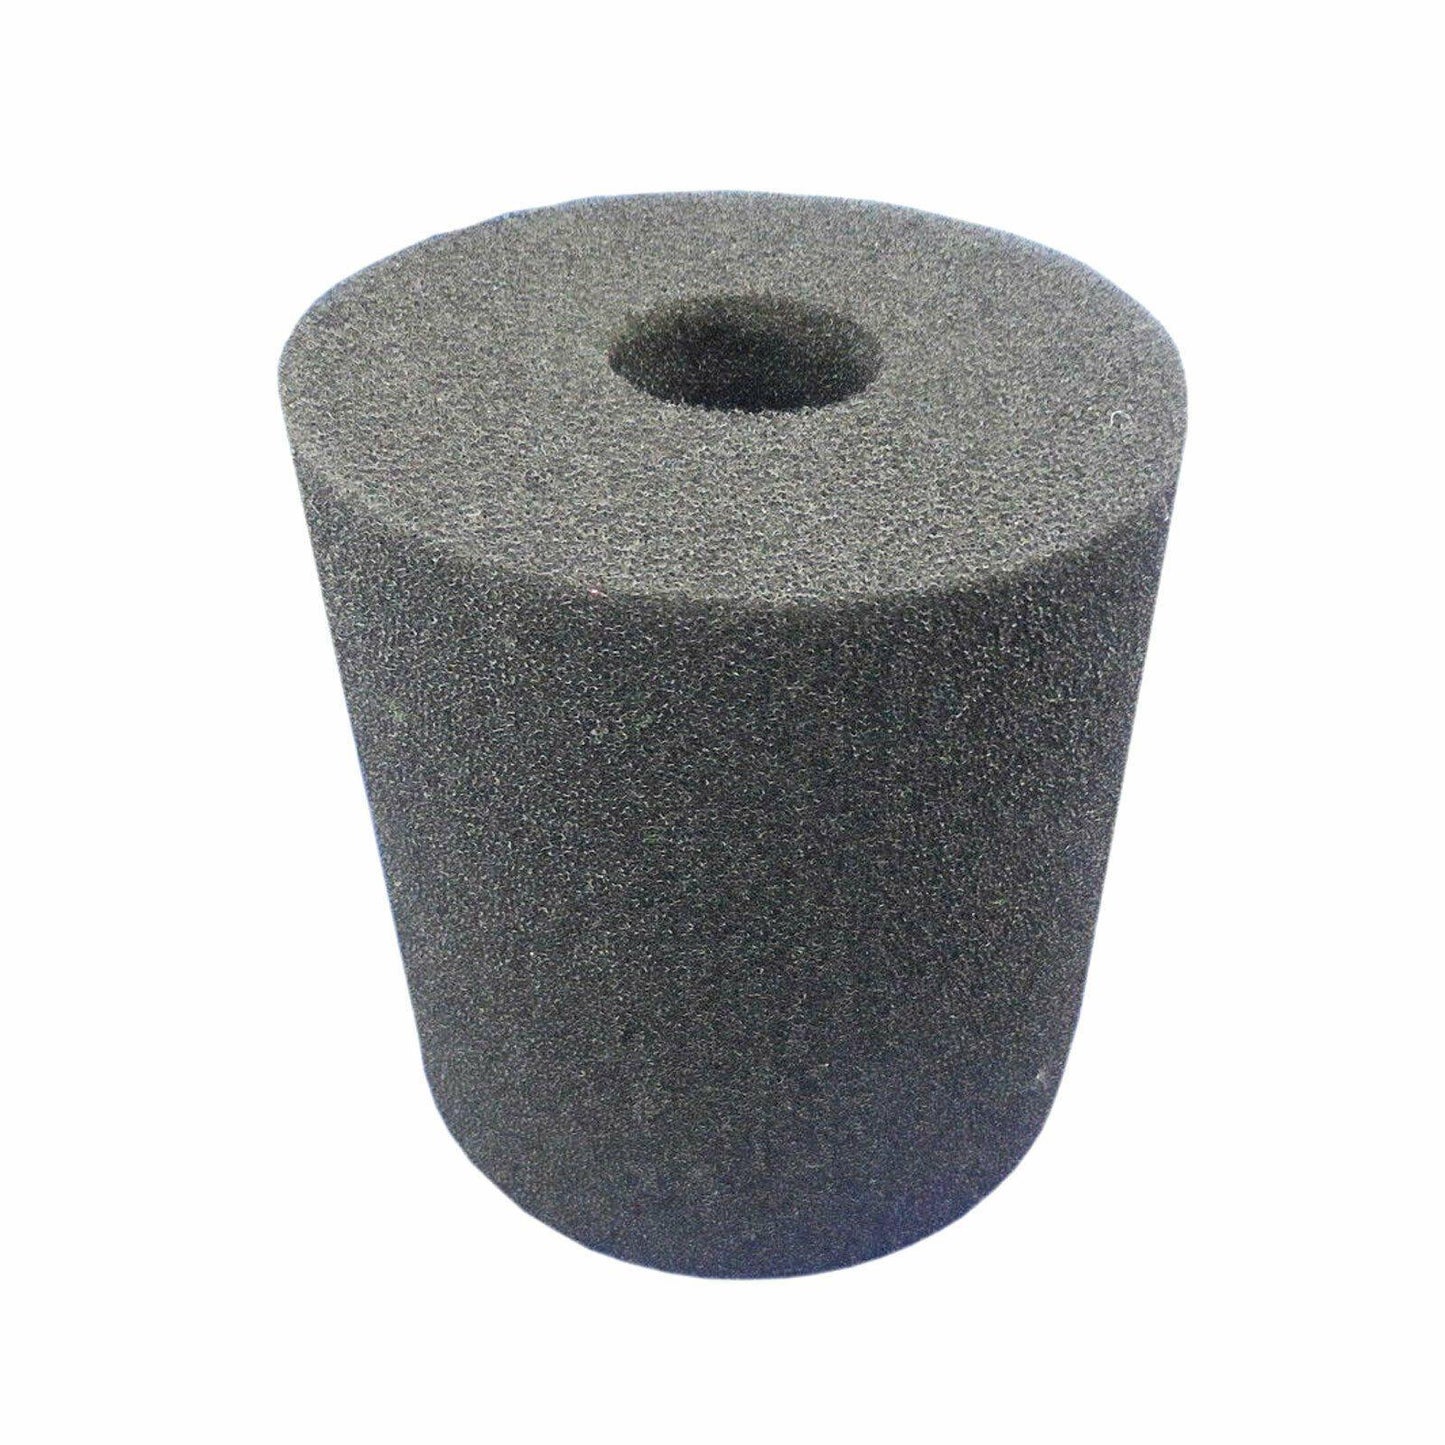 Washable Ducted Sponge Foam Filter For DAS DV1 DV2 Vacuum Cleaner Sparesbarn